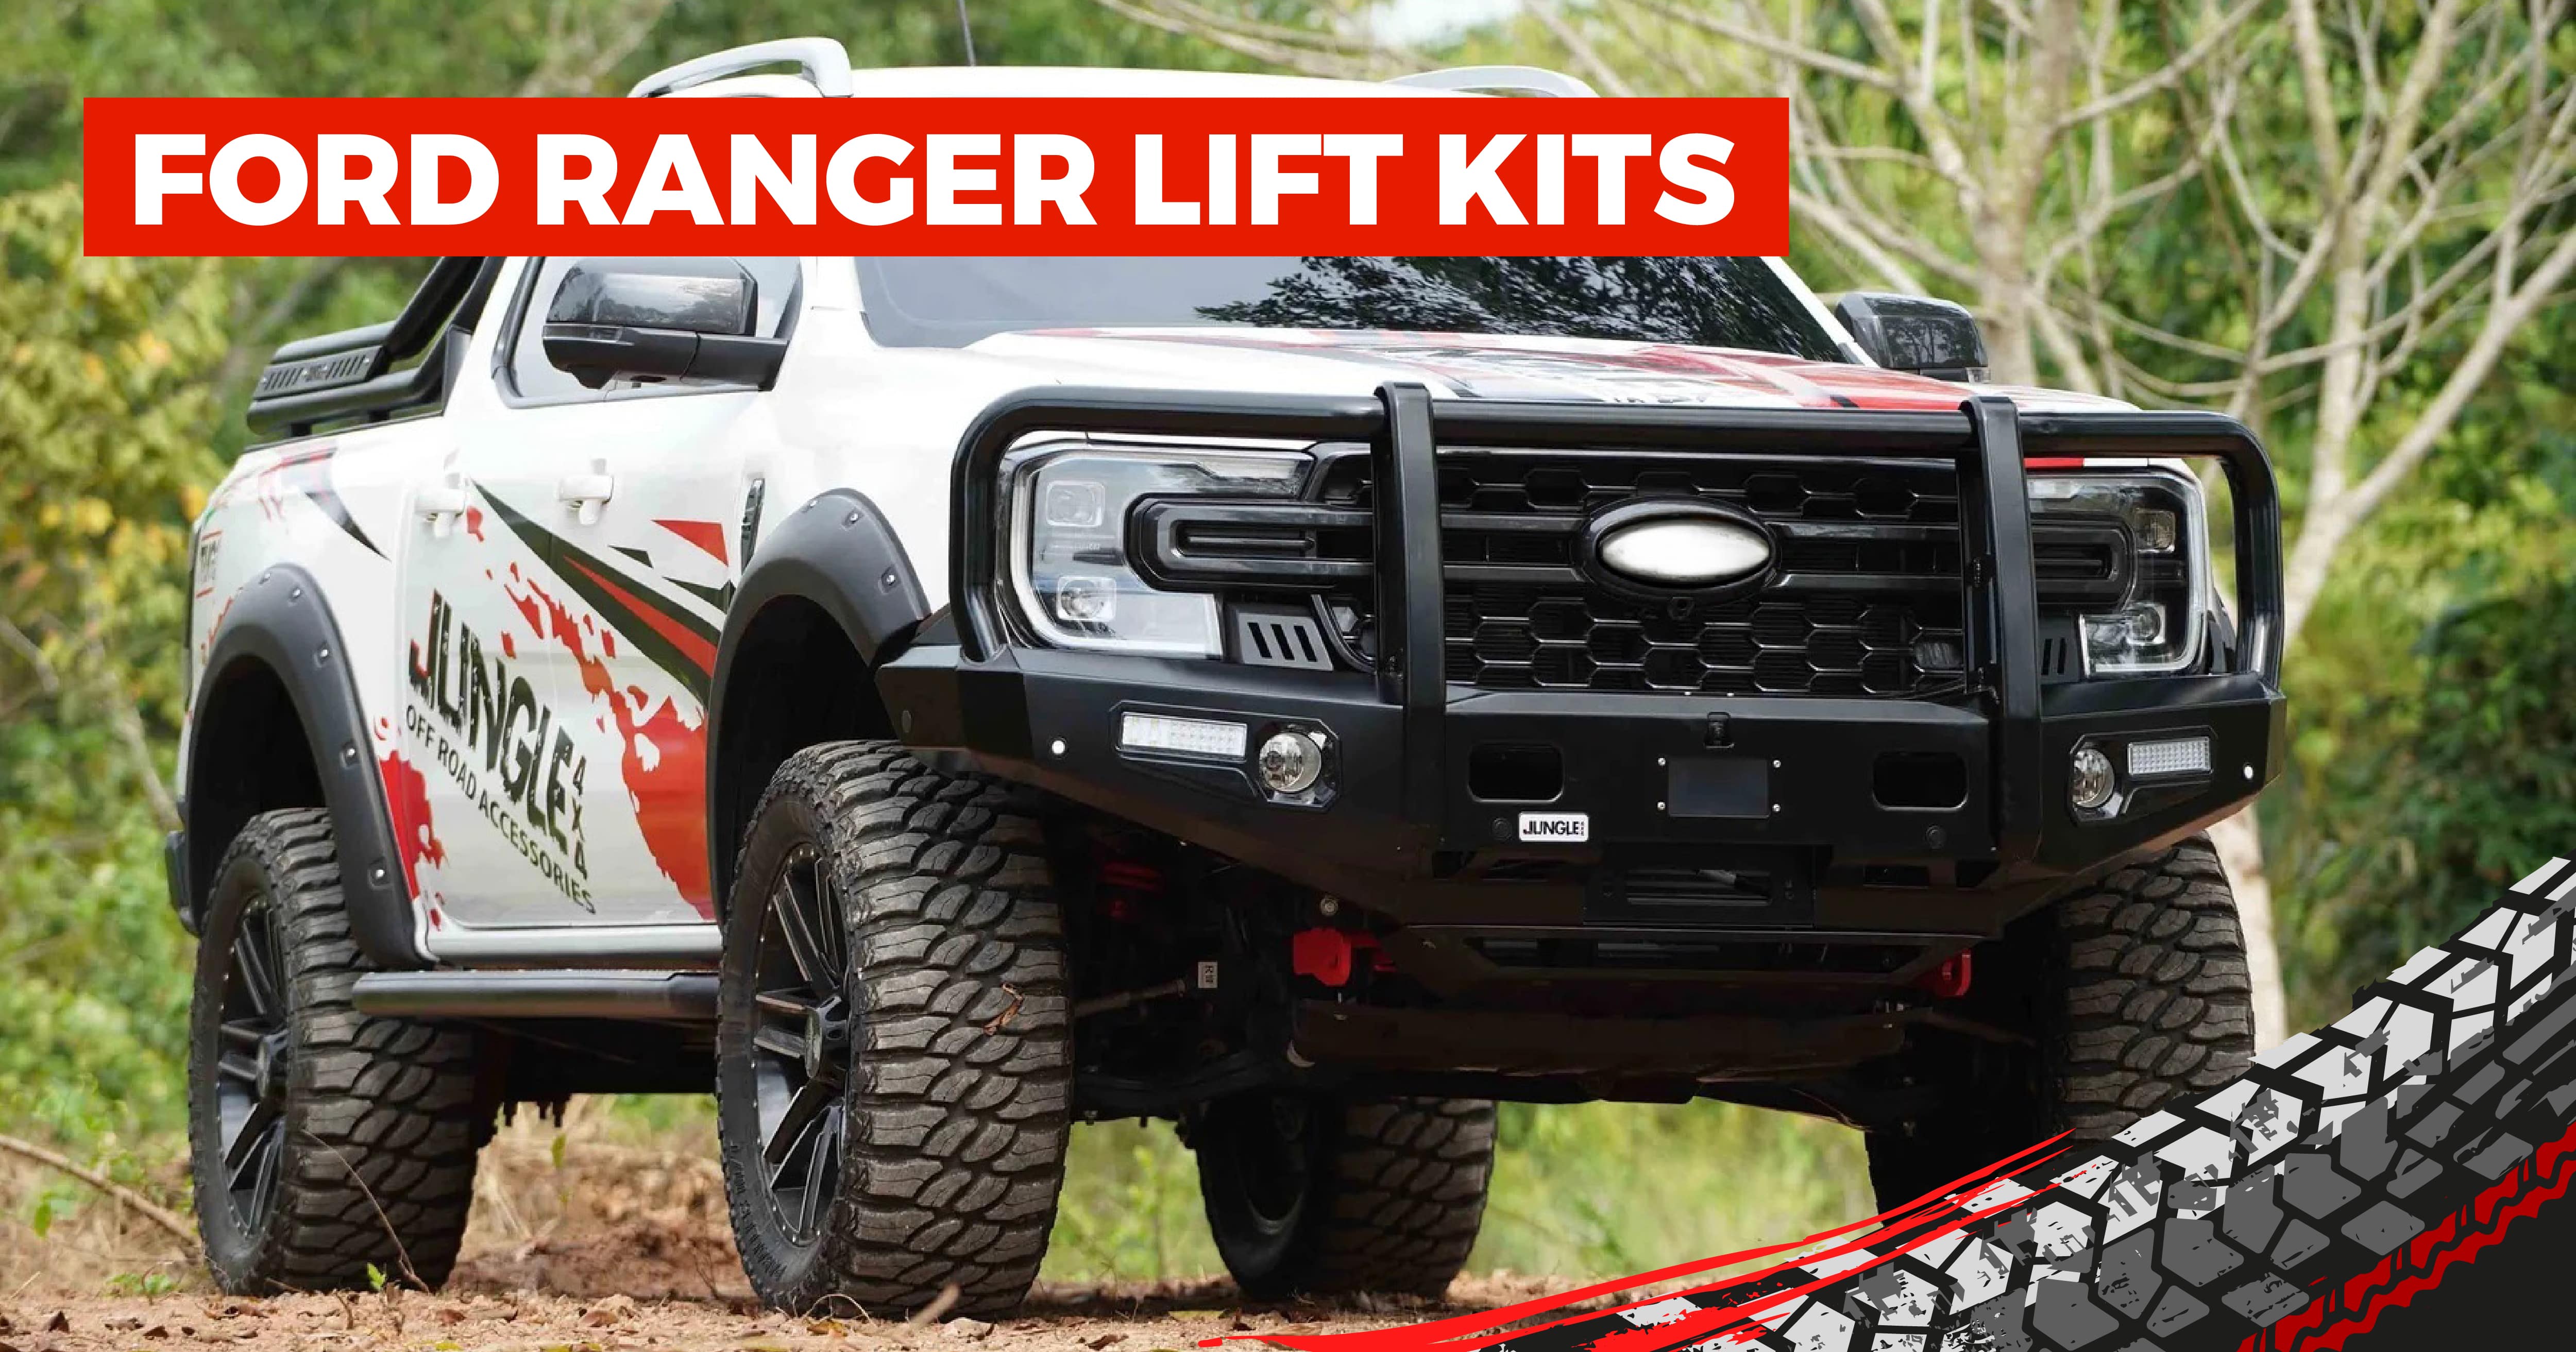 Ford Ranger Lift Kits - Milner Off Road Ltd.